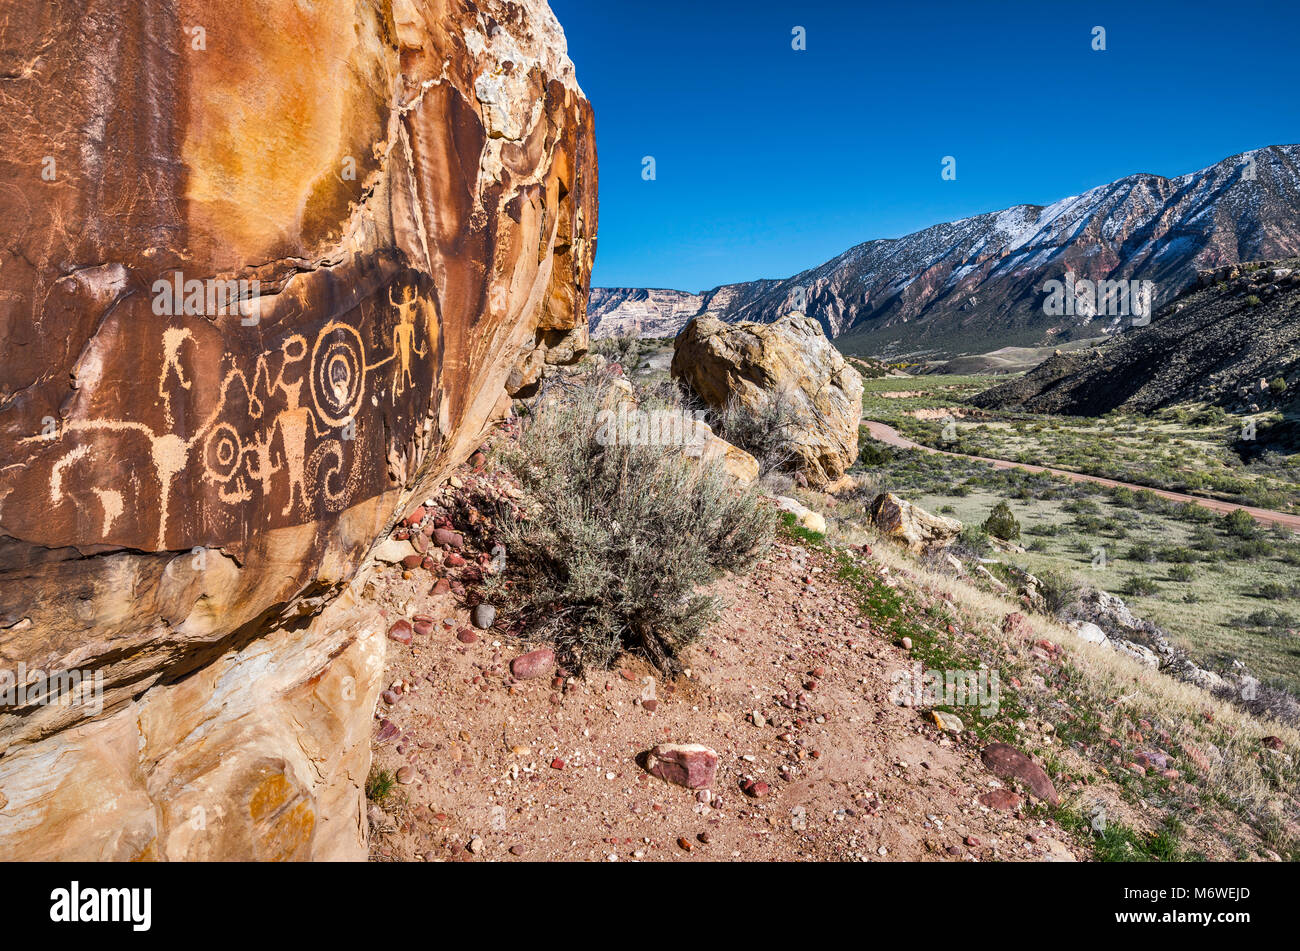 McKee molle incisioni rupestri, Fremont cultura arte rock pannello, Split Mountain in background, Island Park Road, Dinosaur National Monument, Utah, Stati Uniti d'America Foto Stock